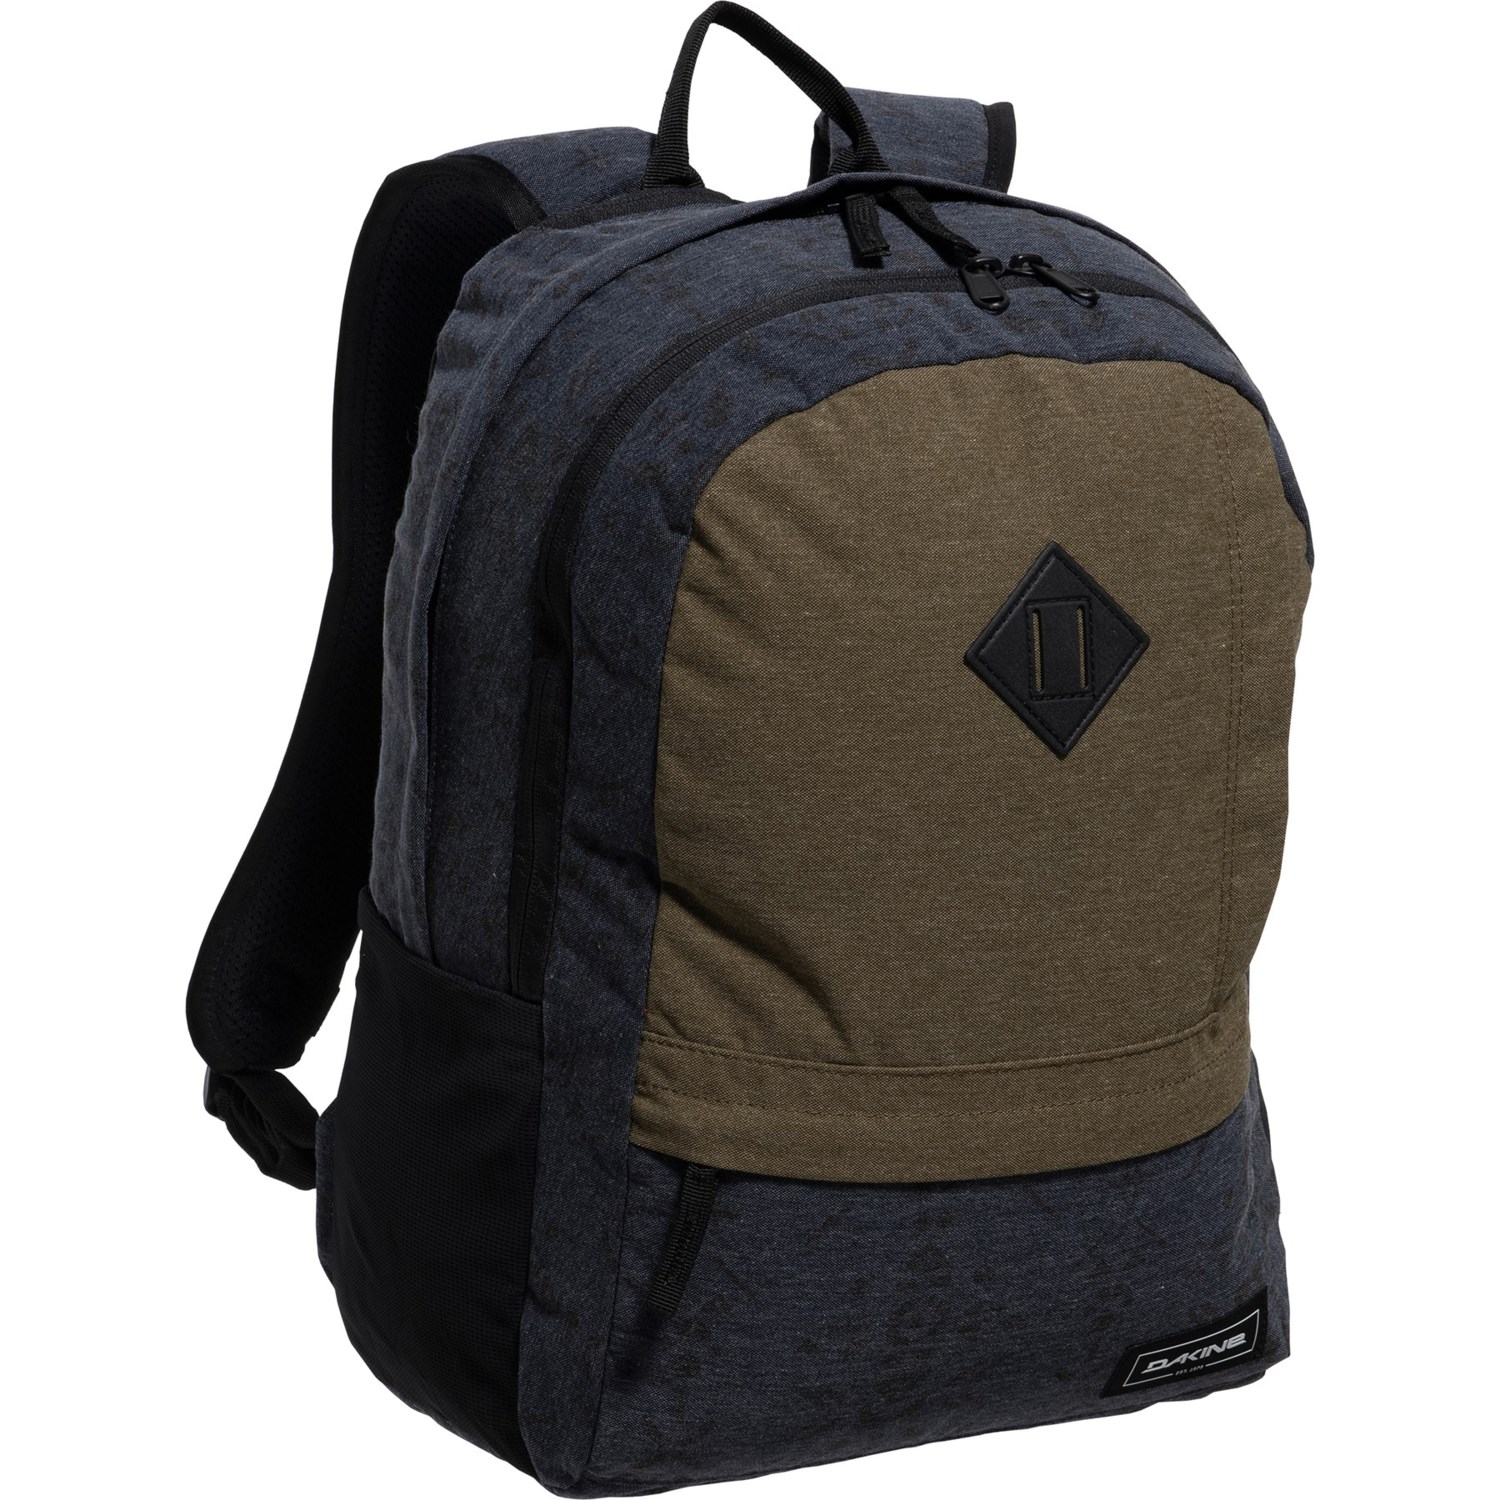 DaKine Essentials 22 L Backpack - Night Sky Geo